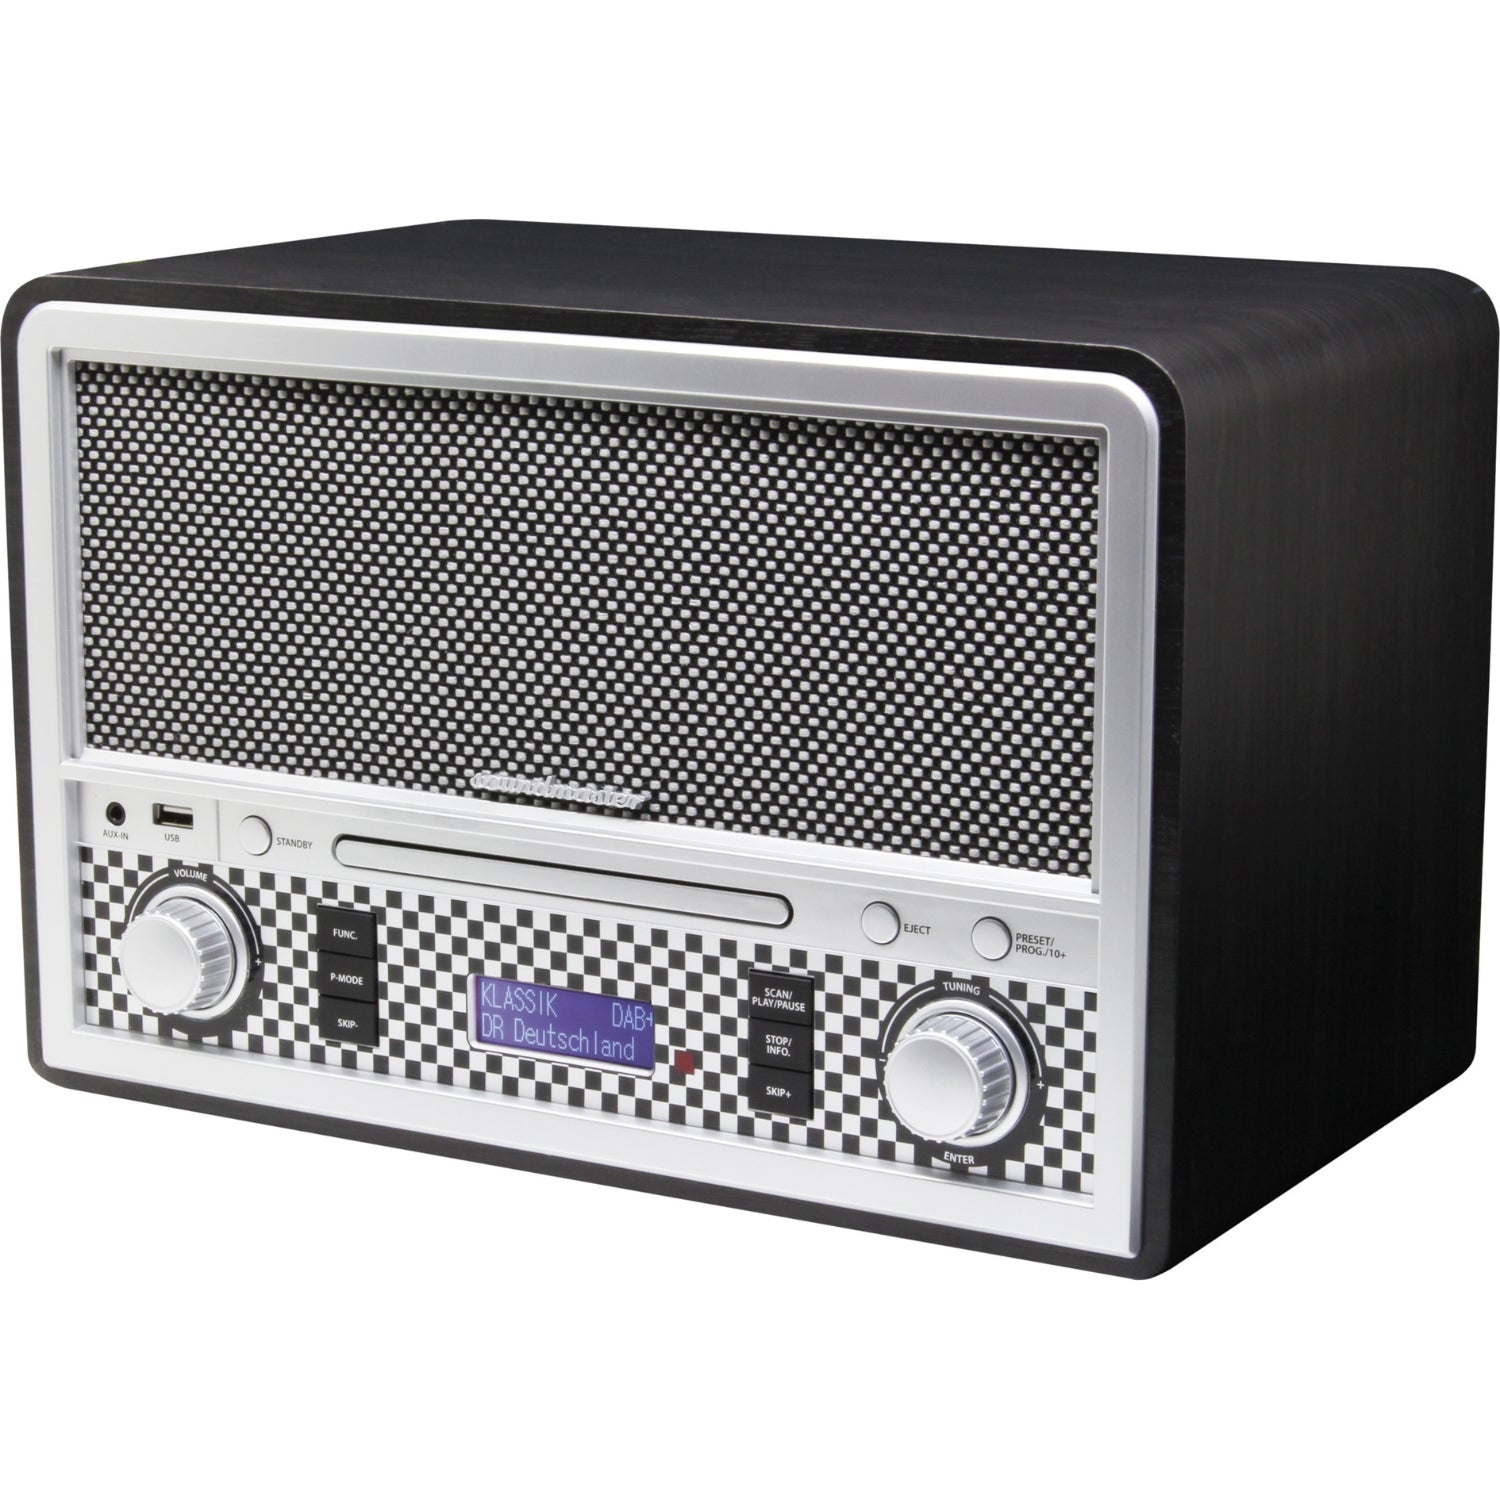 Soundmaster HighLine NR955SW Nostalgic Retro Compact System Radio DAB+ FM Radio USB CD Player MP3 Bluetooth